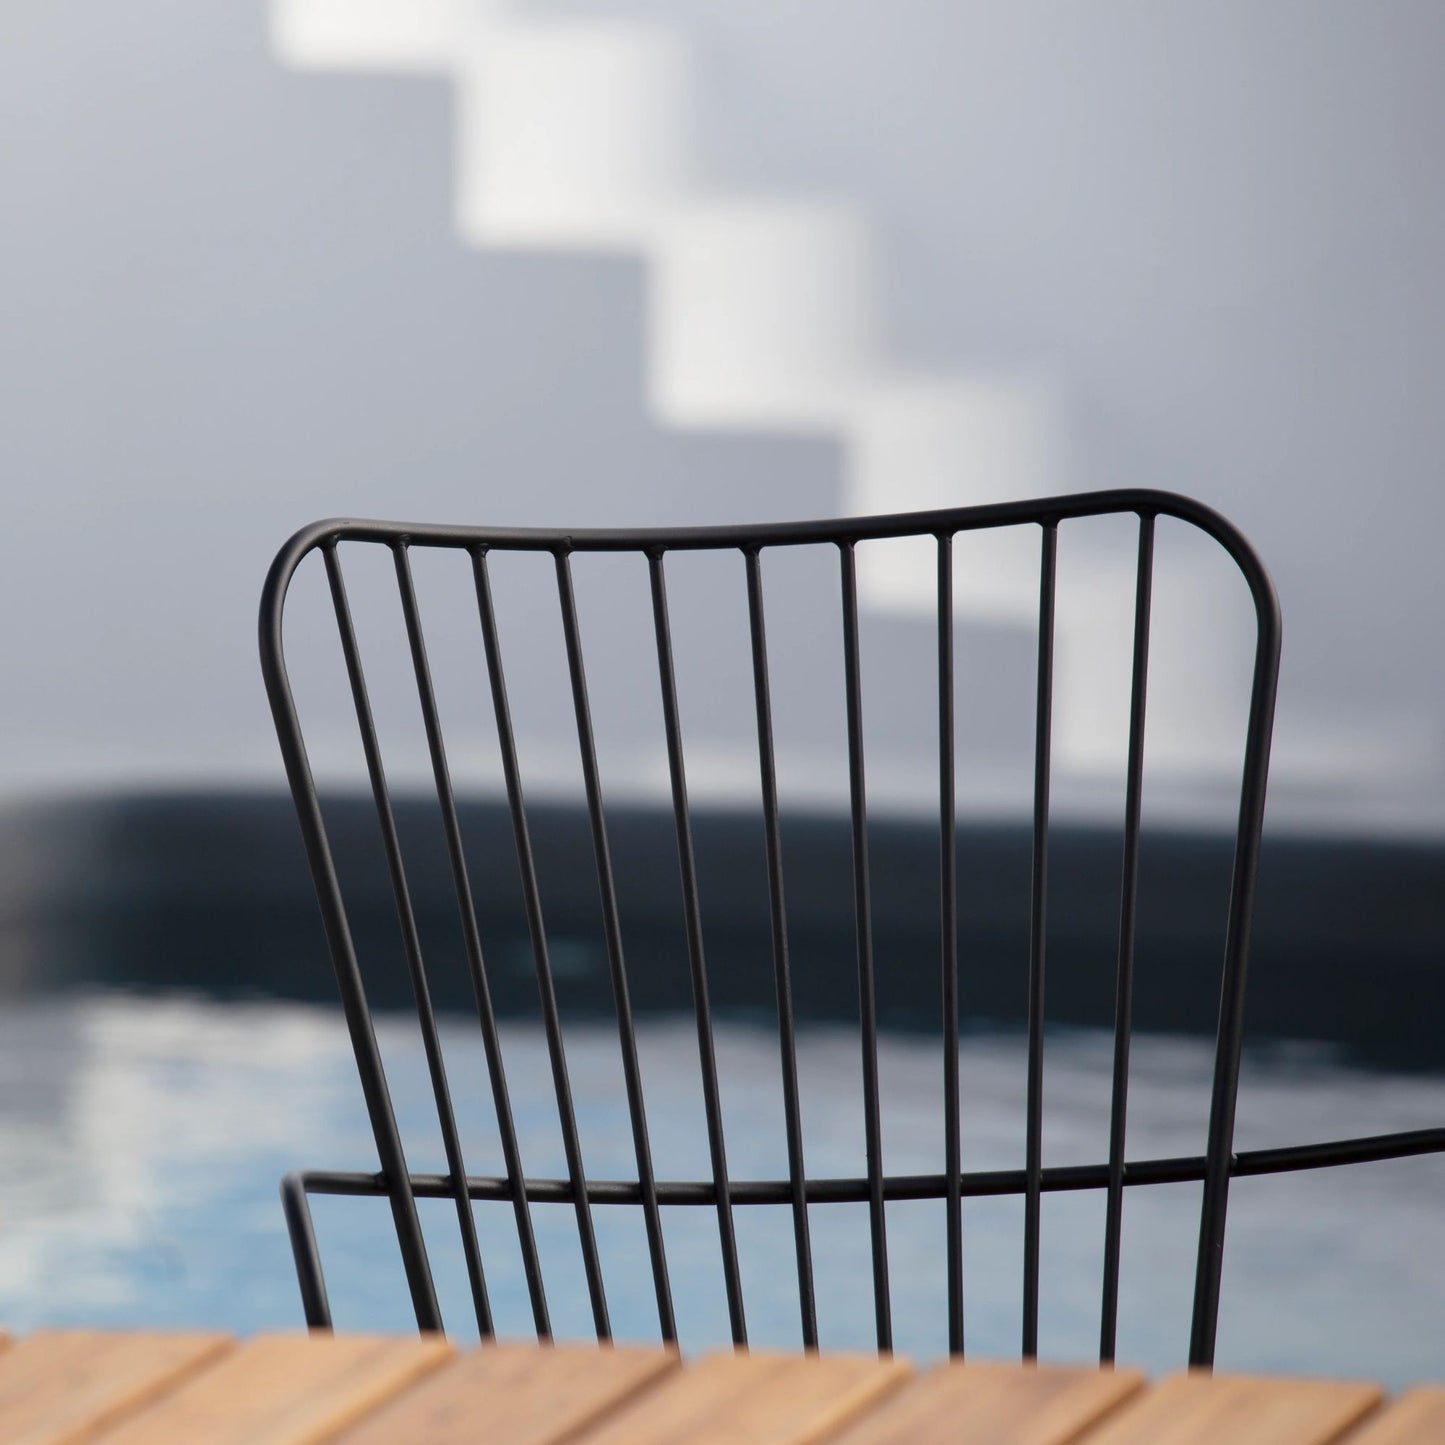 Paon Bar Chair with Cushion - Grey